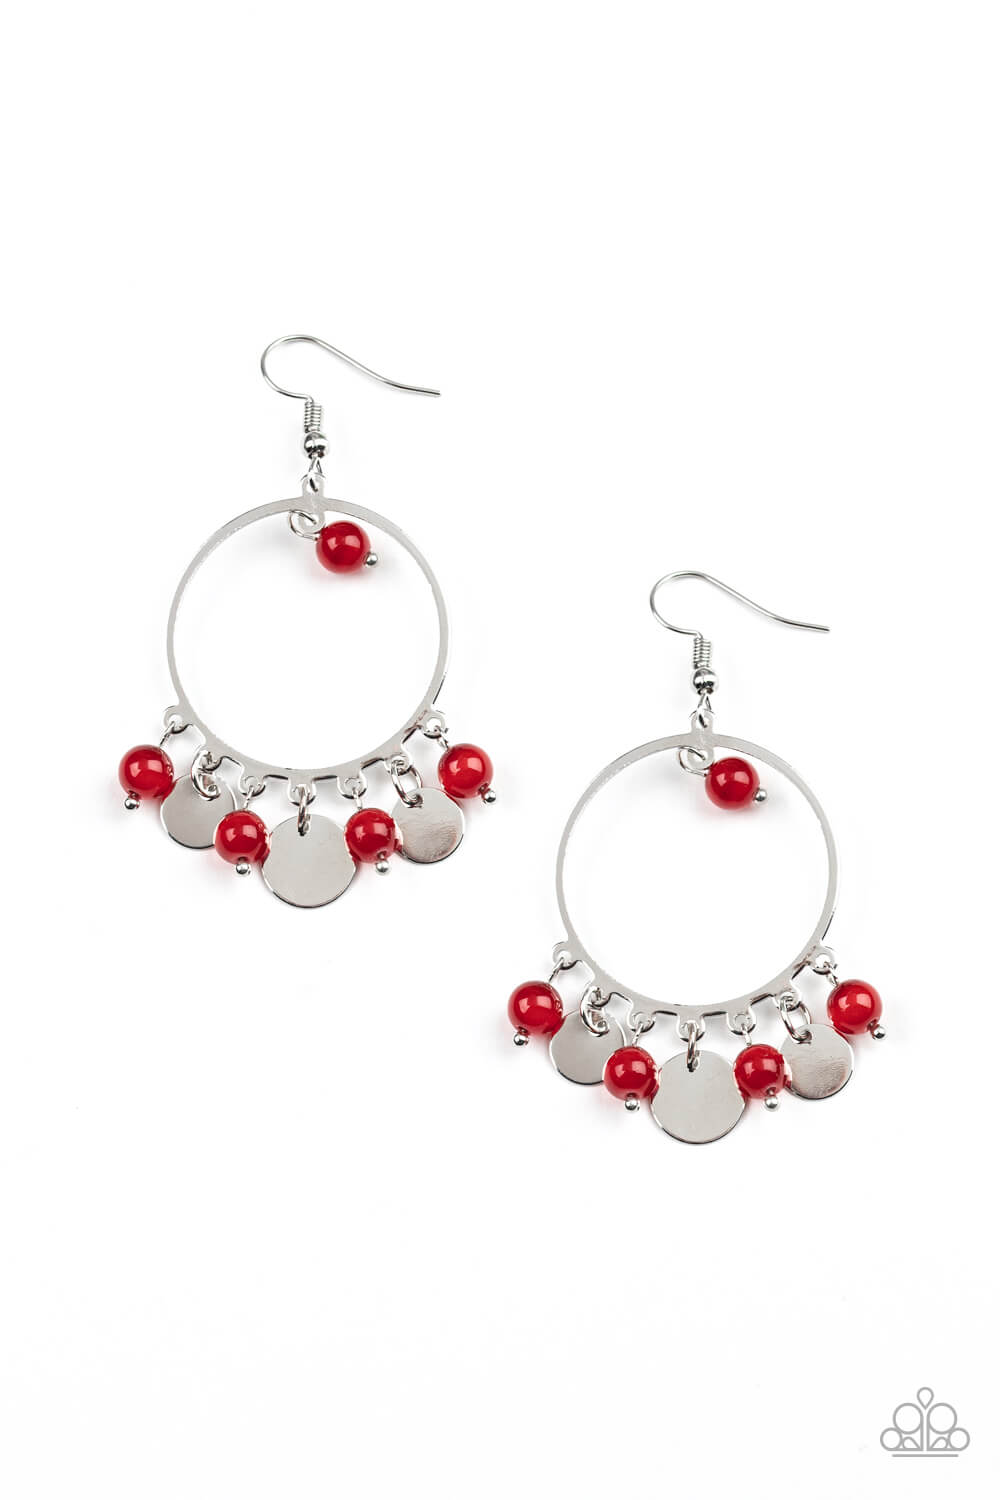 Bubbly Buoyancy - Red Earrings - Princess Glam Shop